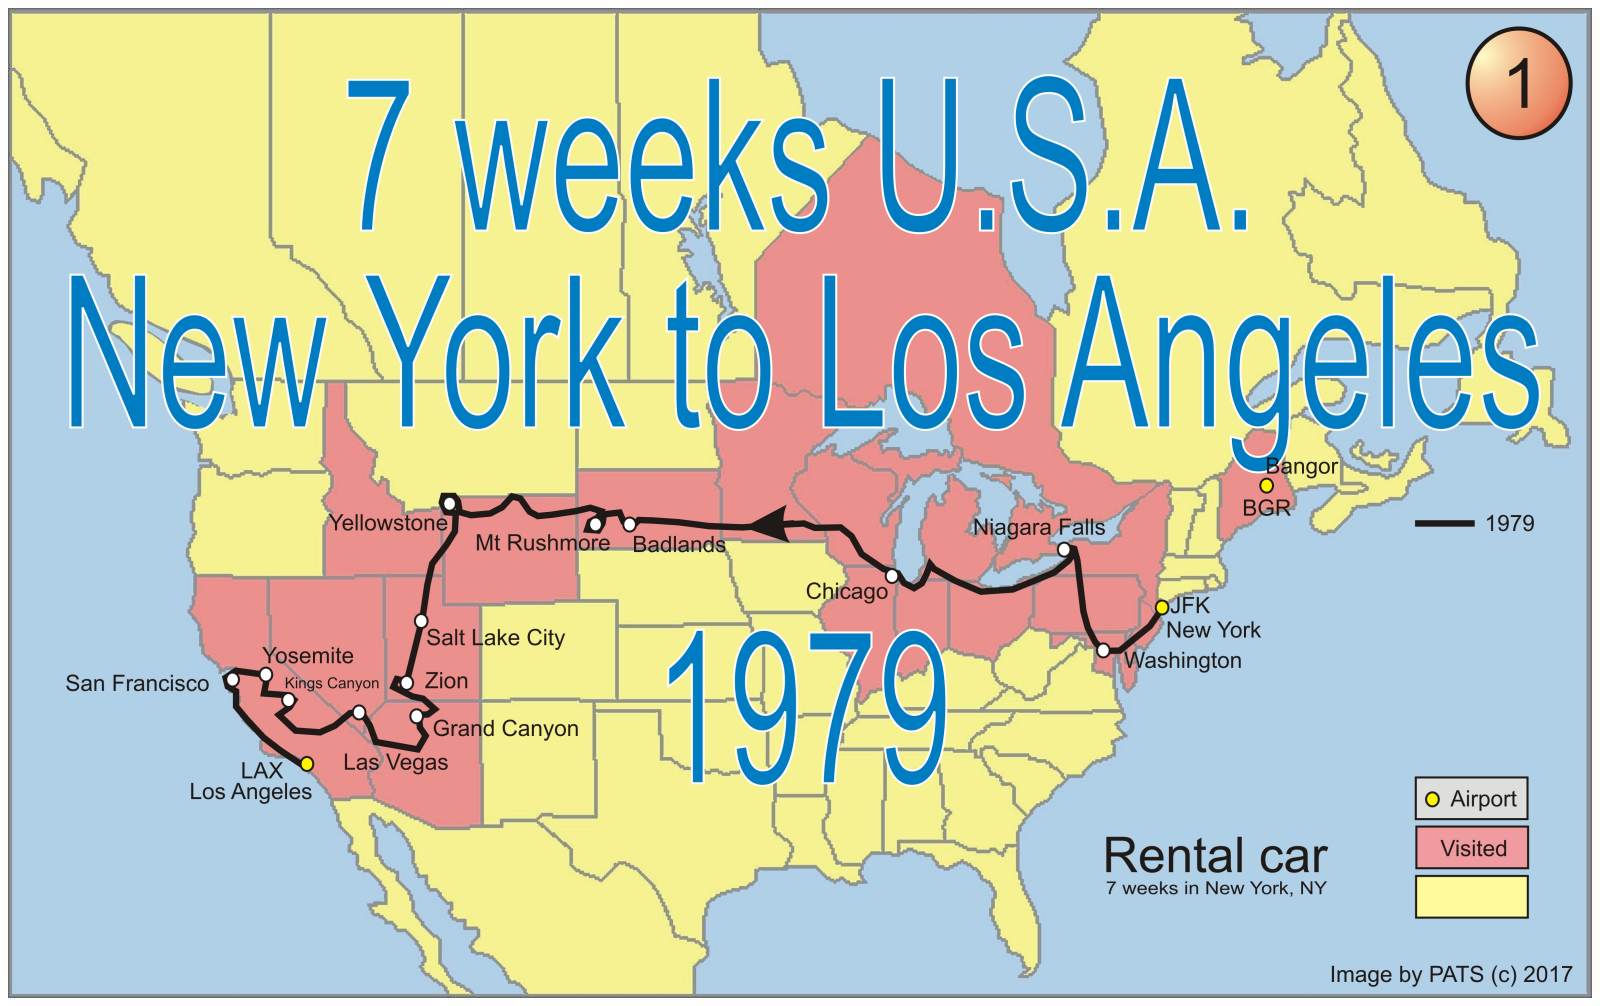 1979 - 7 weeks - New York to Los Angeles